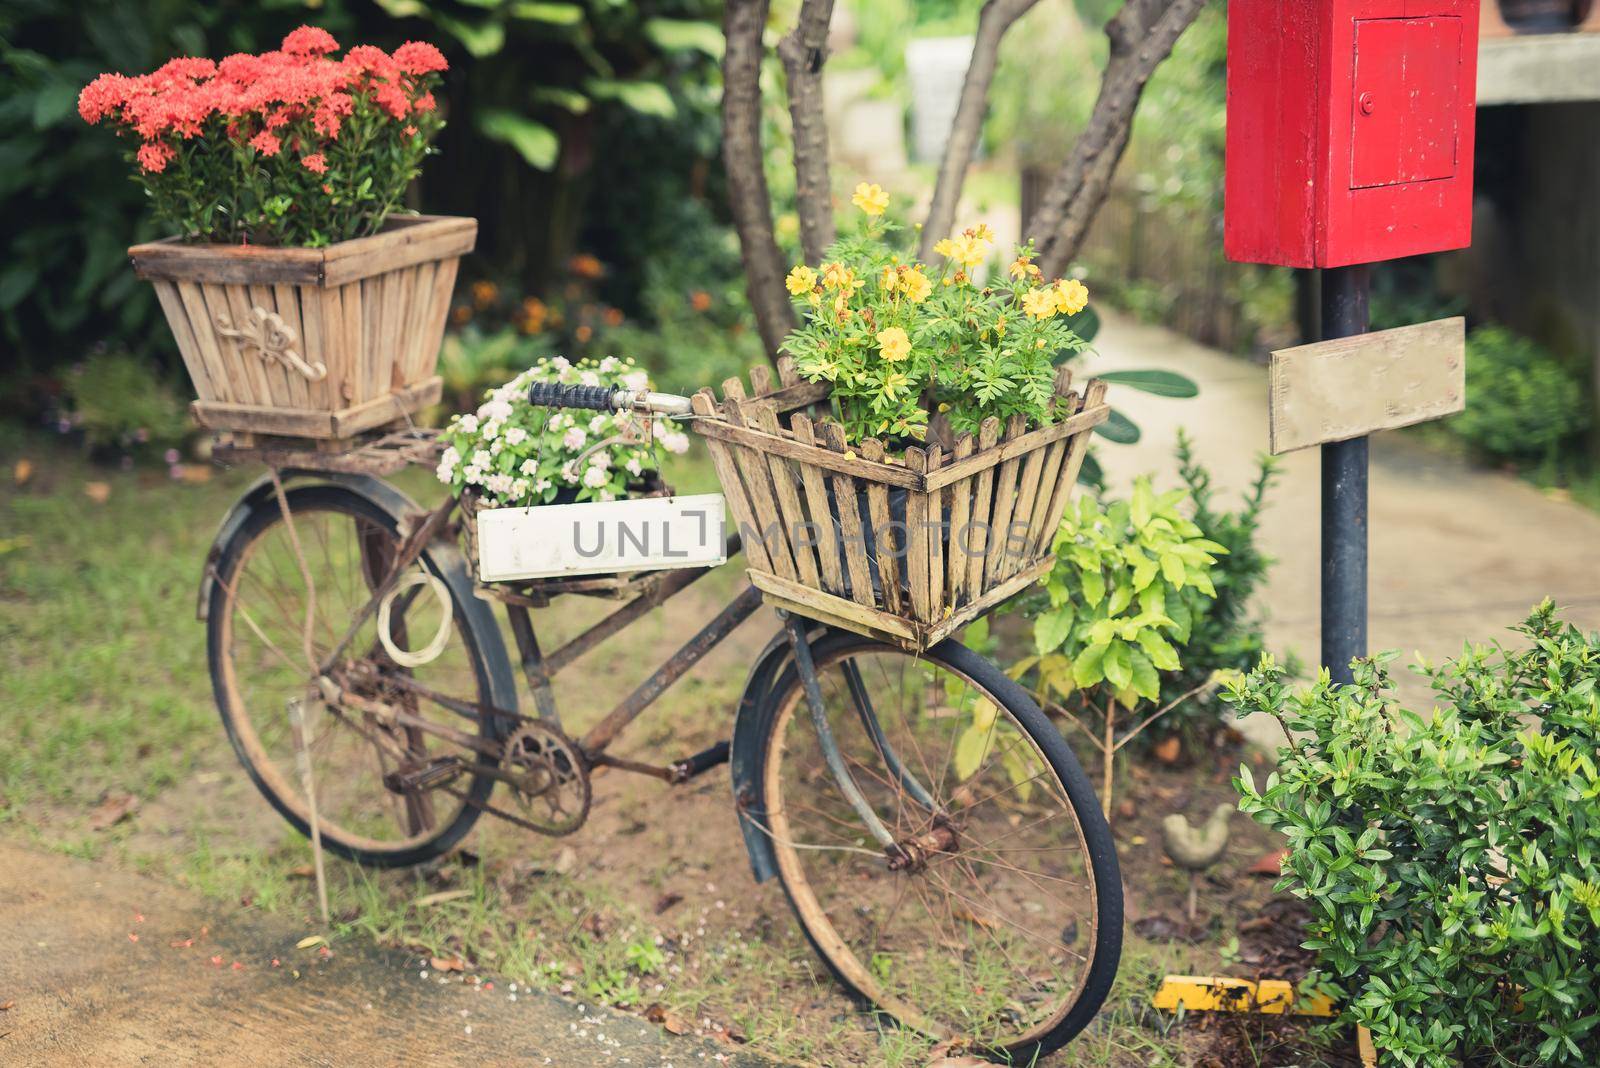 Vintage bicycle with flowers